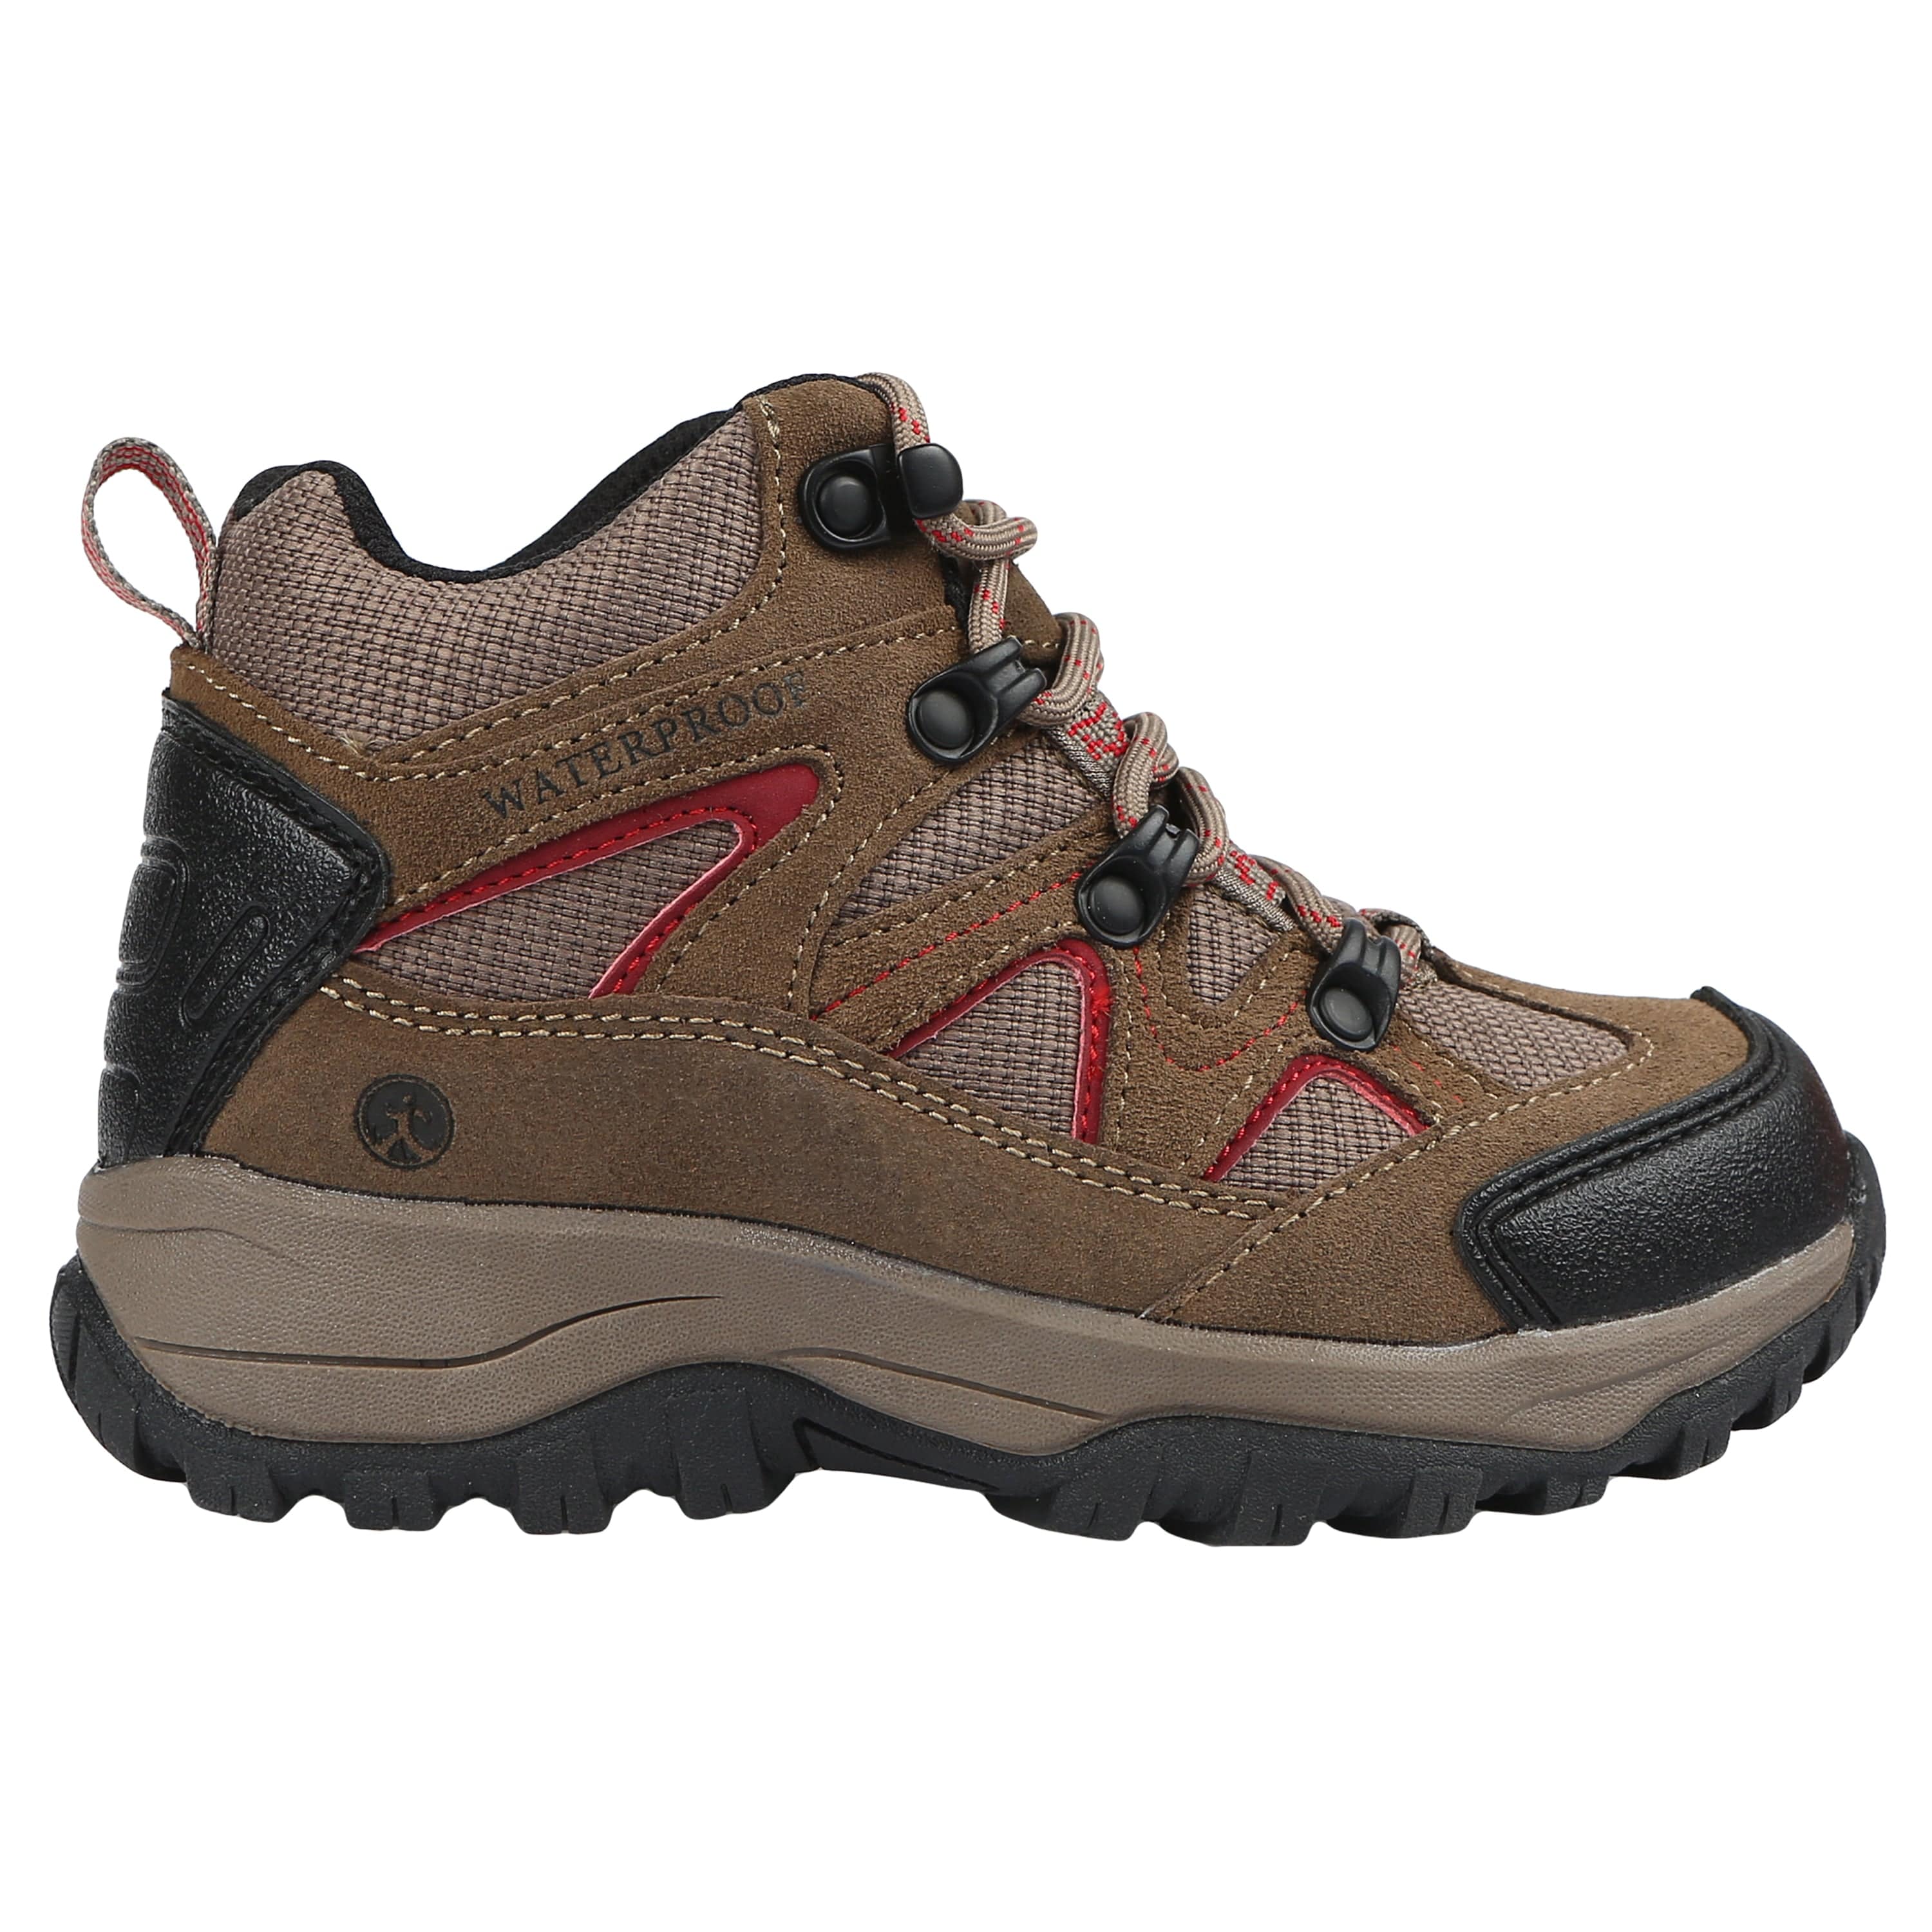 Kid's Snohomish Jr. Waterproof Hiking Boot - Northside USA